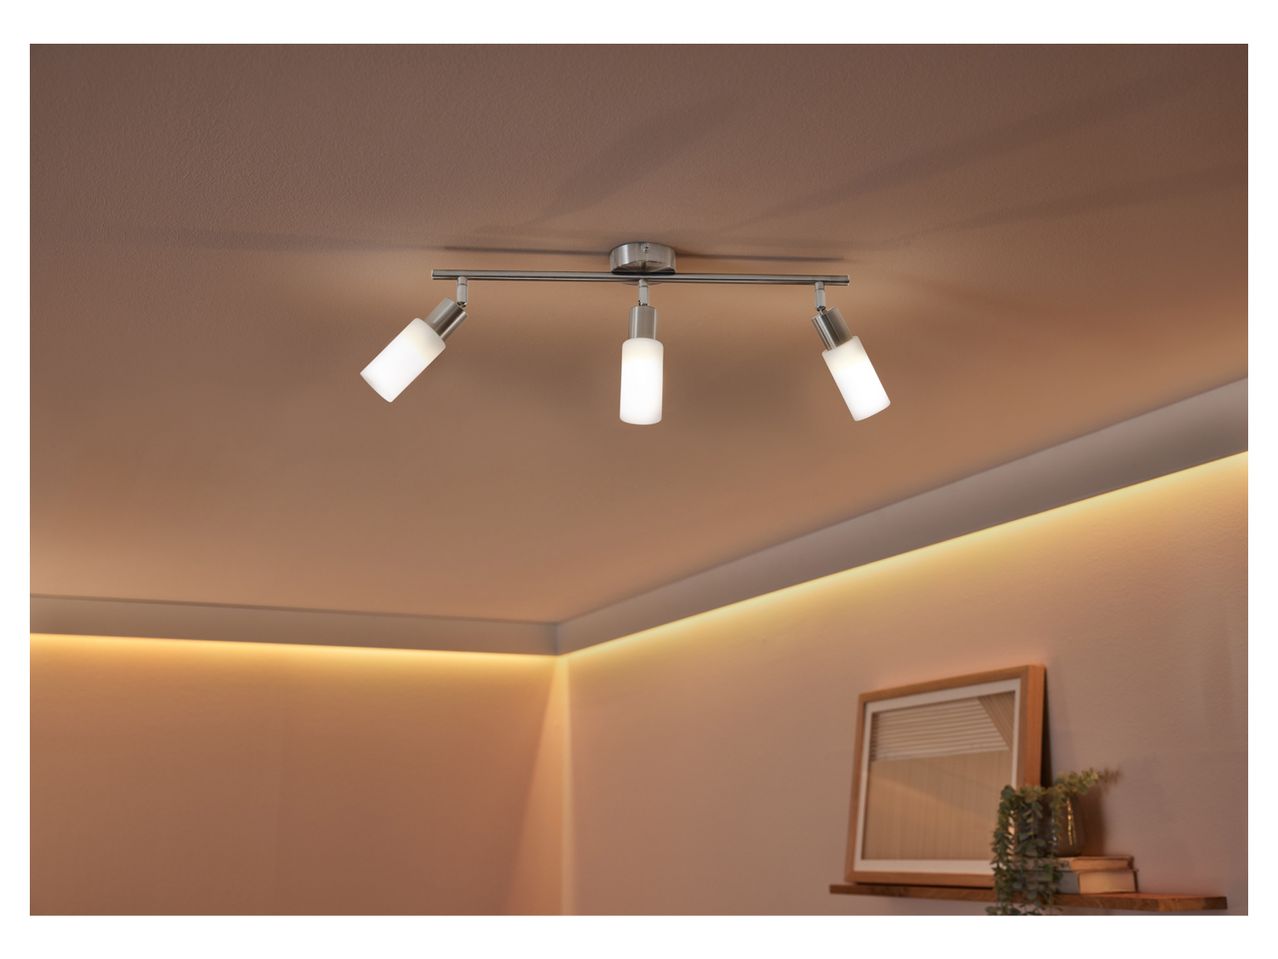 Lampada LED da soffitto , prezzo 19.99 EUR 
Lampada LED da soffitto Risparmia energia ...